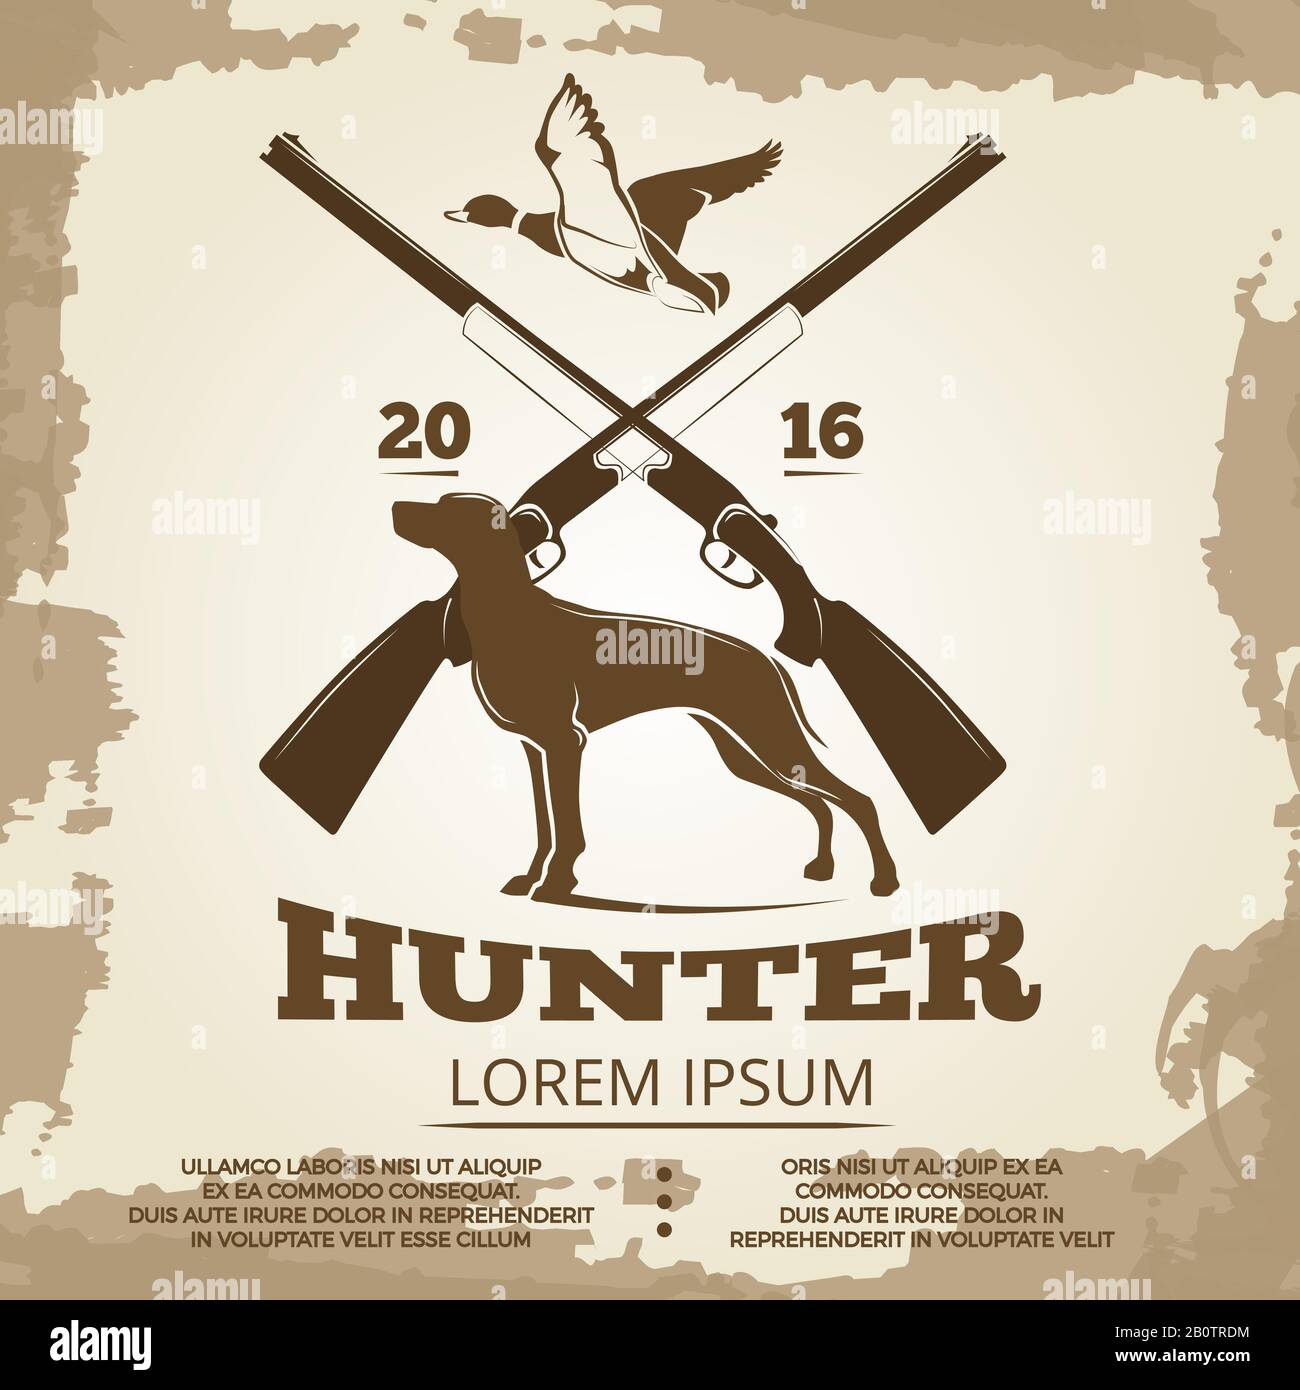 Hunting vintage poster design with guns, dog and duck. Hunt banner vector illustration Stock Vector